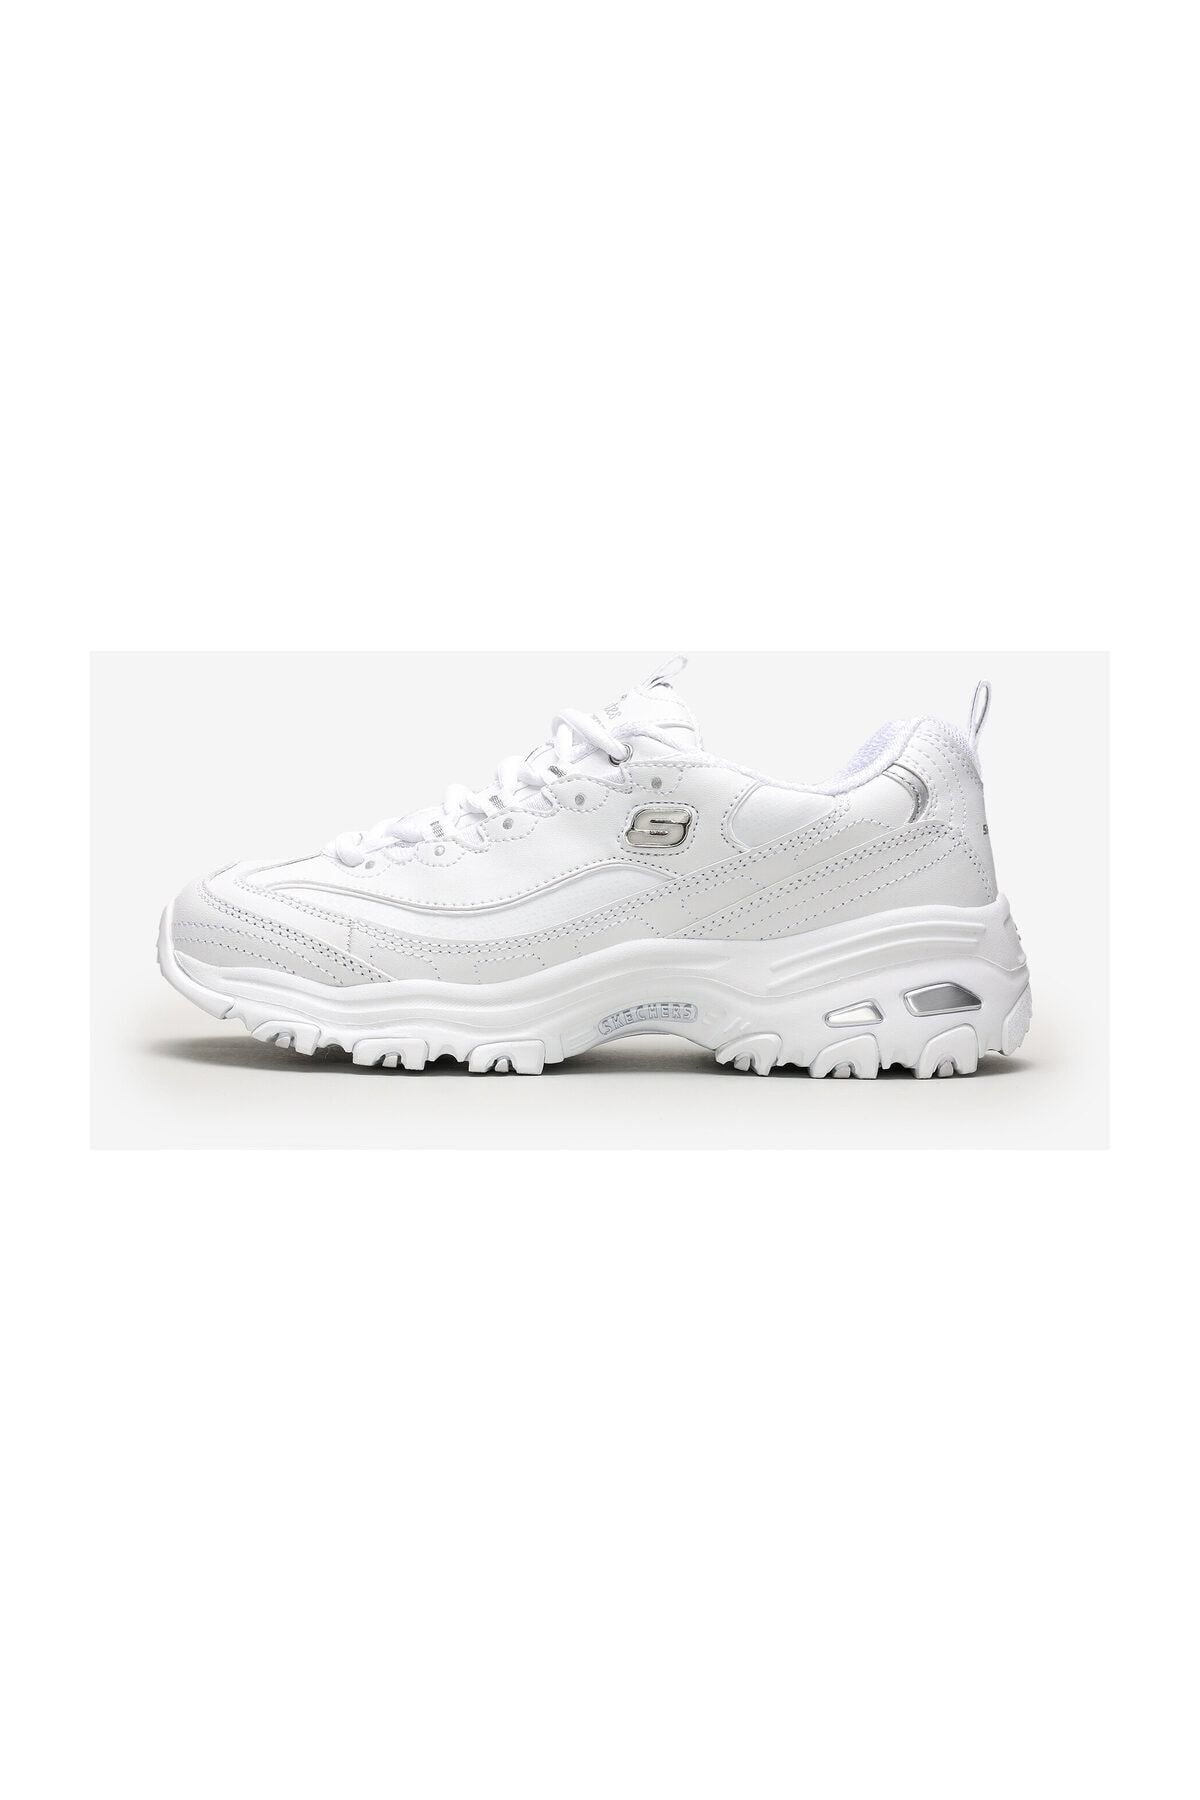 Skechers D'LİTES - FRESH START Kadın Beyaz Sneakers-11931 WSL